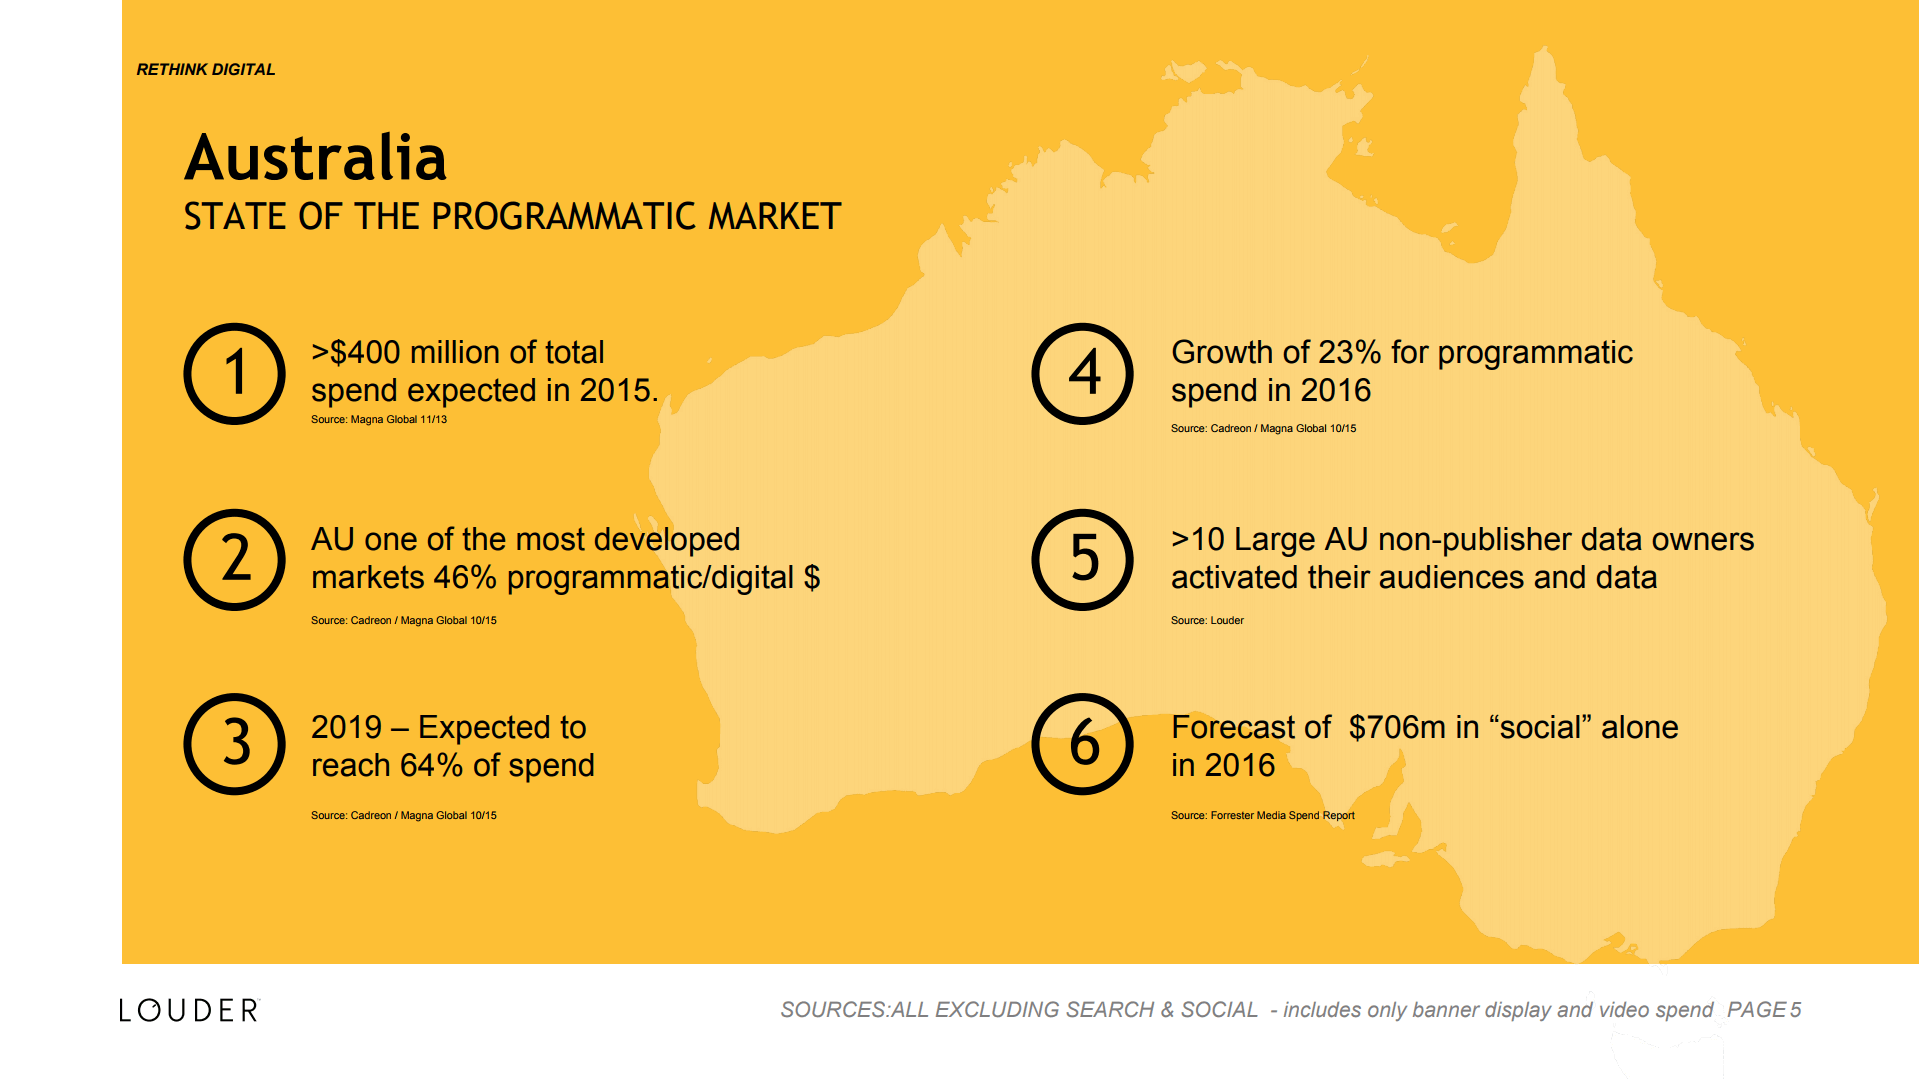 Australia, state of the programmatic market